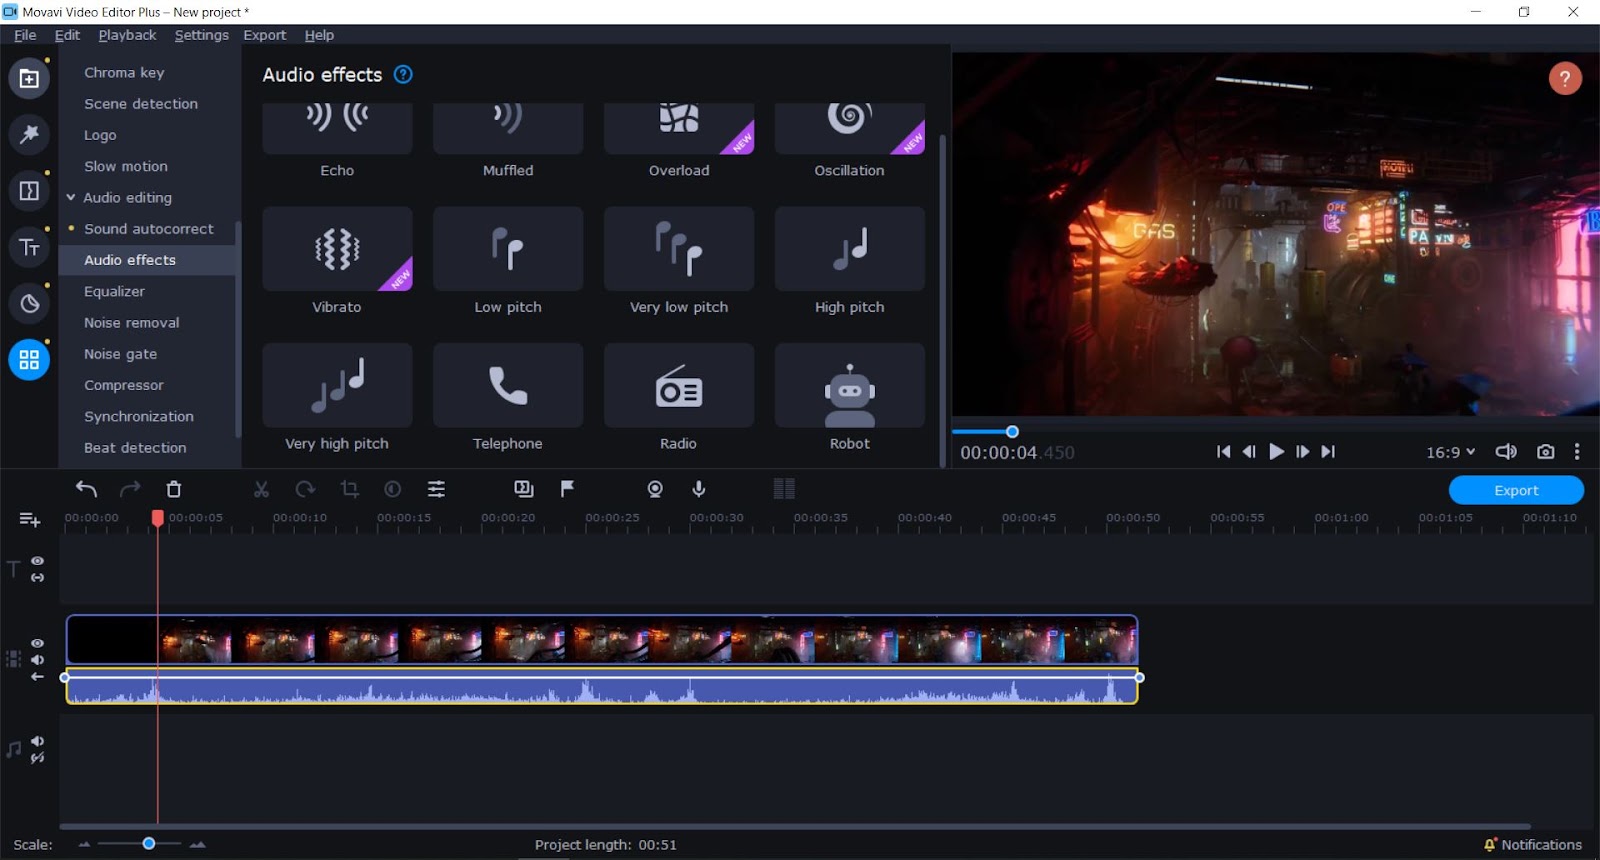 Complete Movavi Video Editor Plus Toolkit